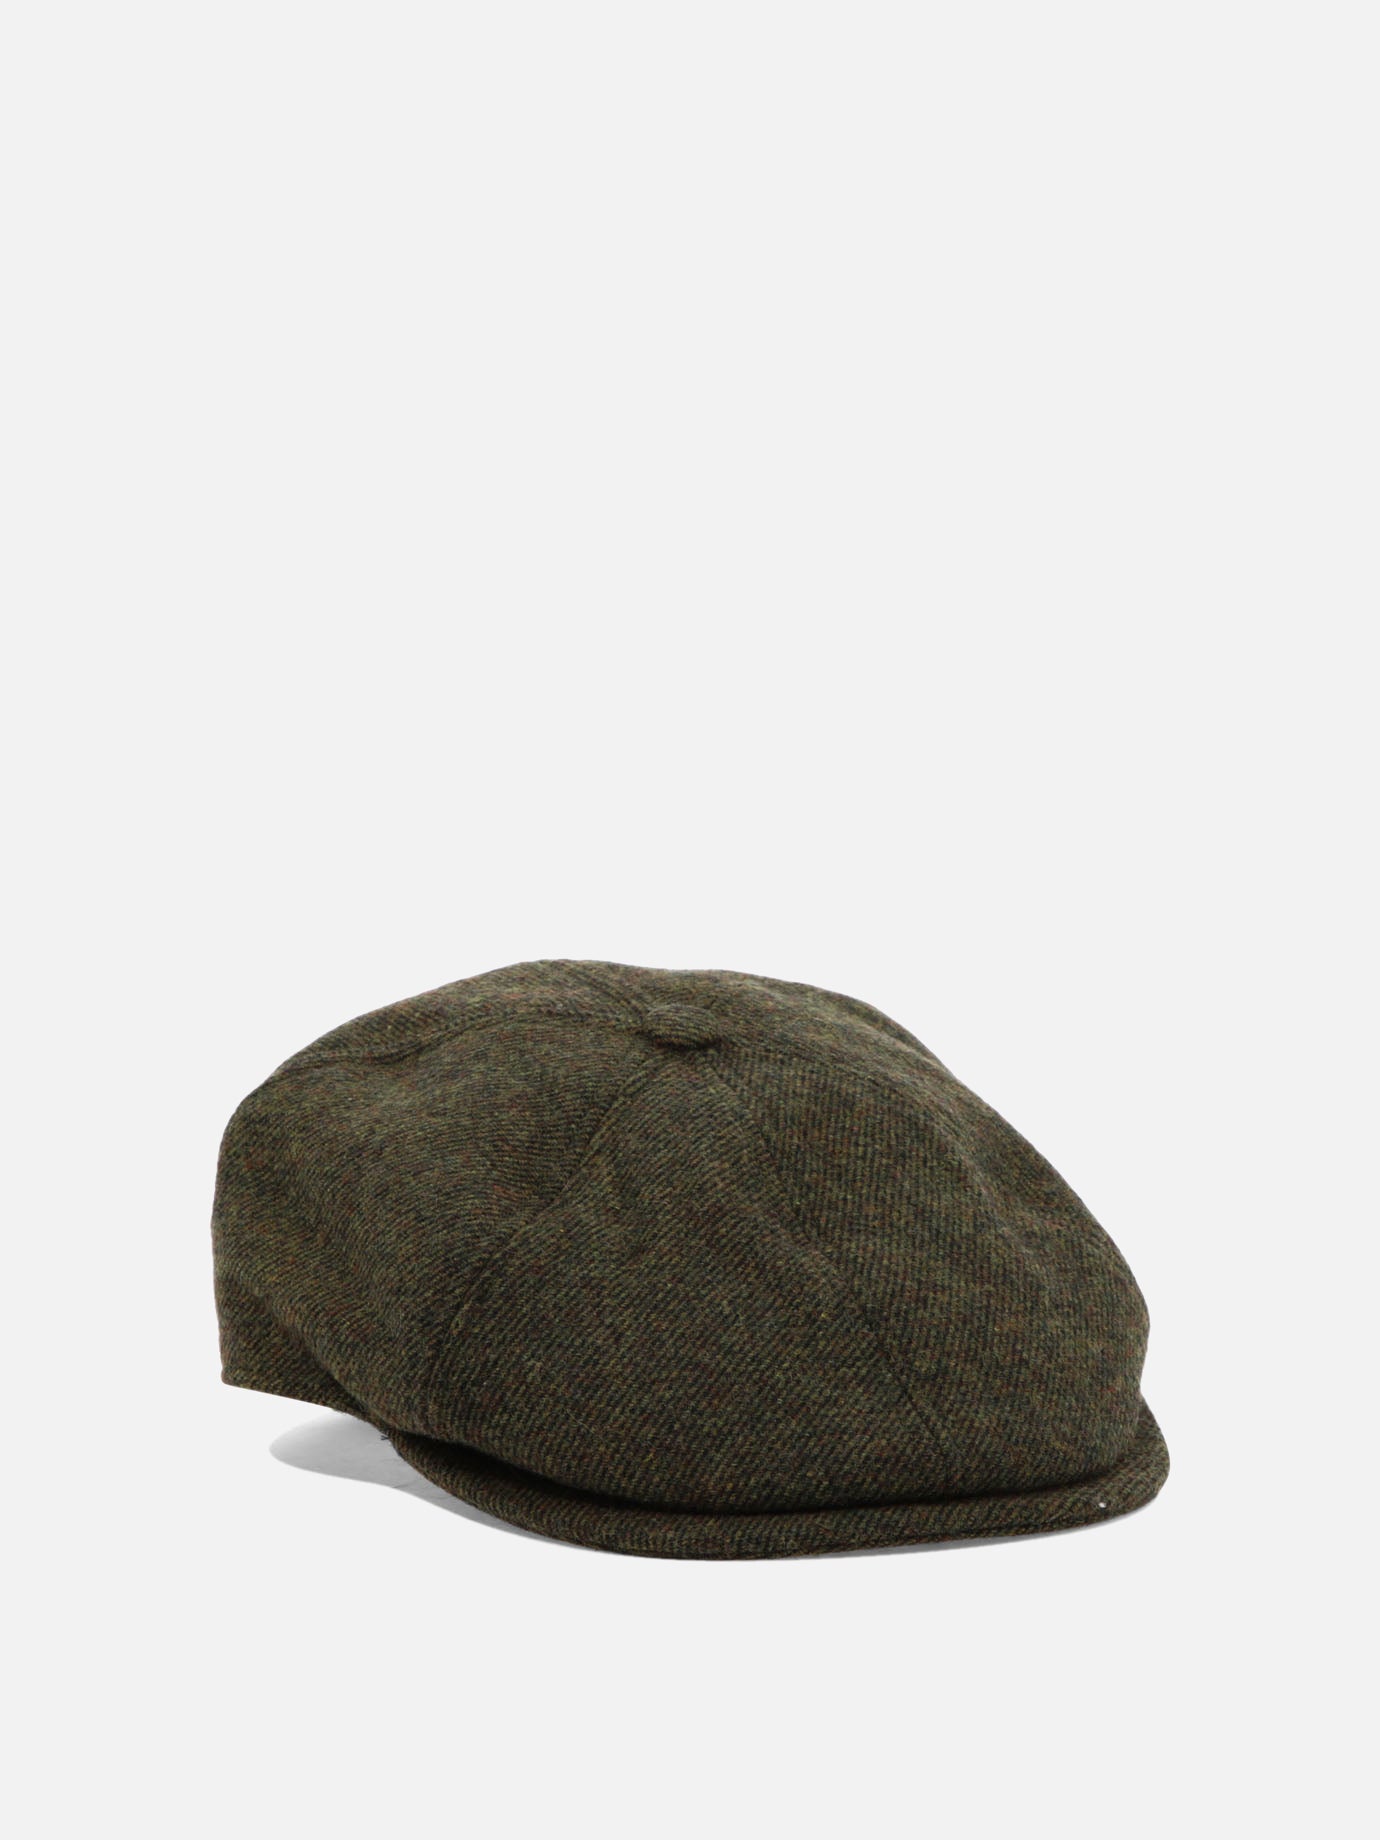 "Claymore" bakerboy hat